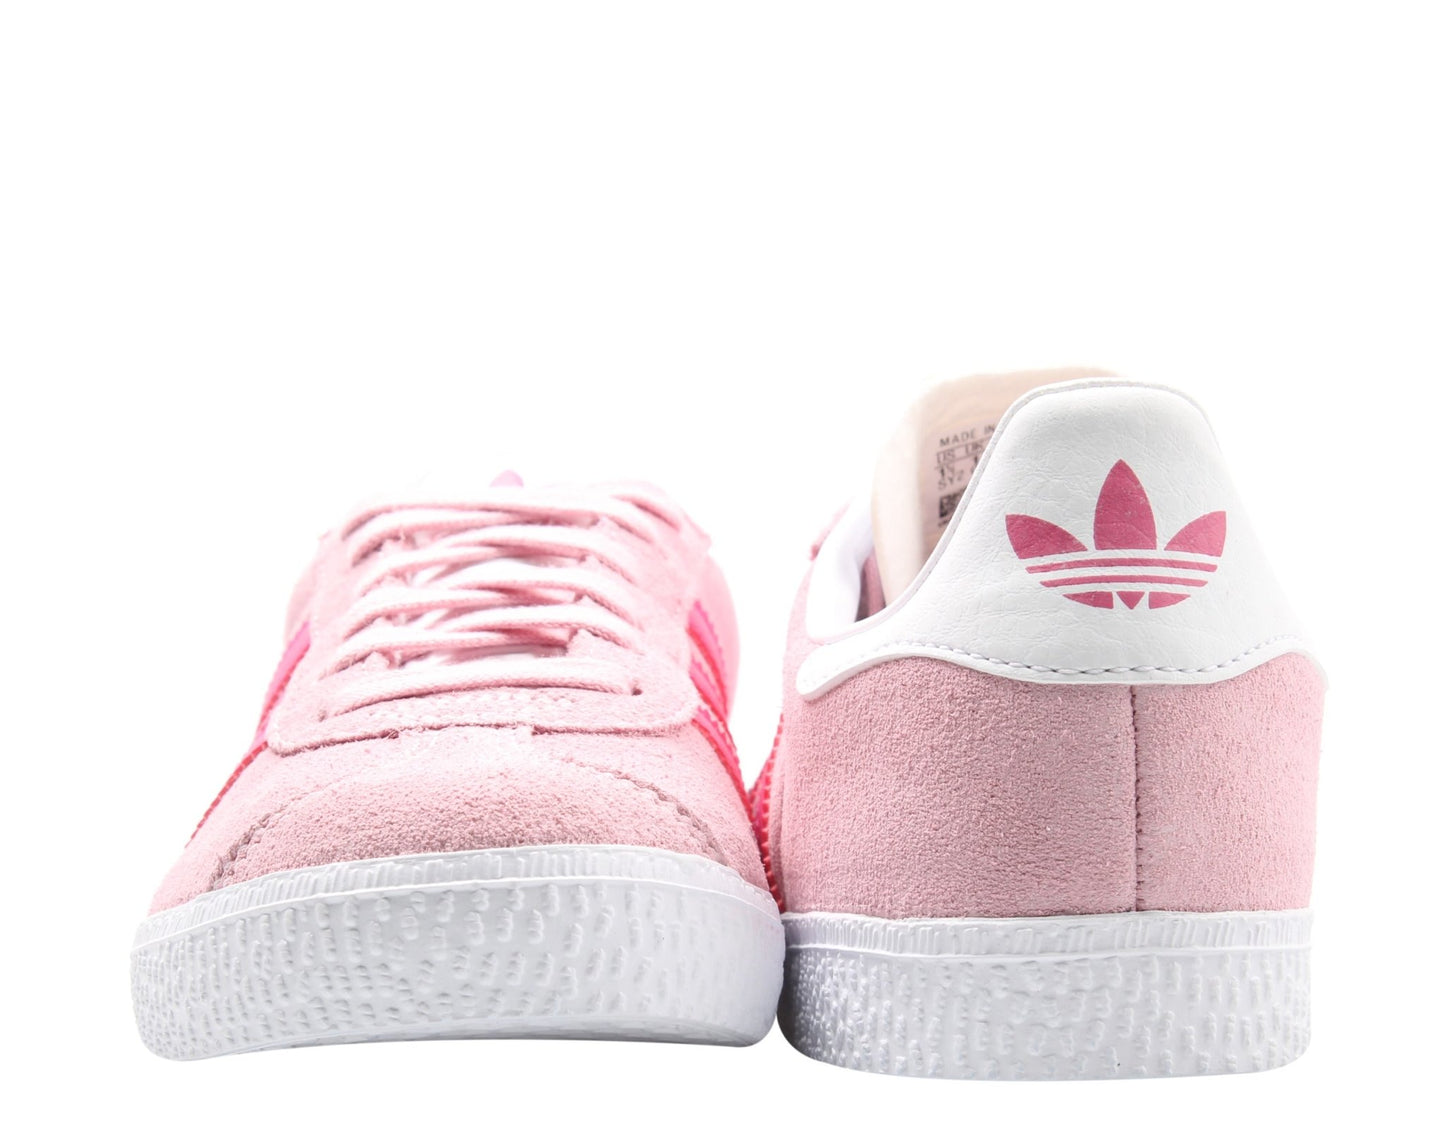 Adidas Originals Gazelle C Children Pink/Magenta/White Kids Casual Shoes B41534 - Becauze